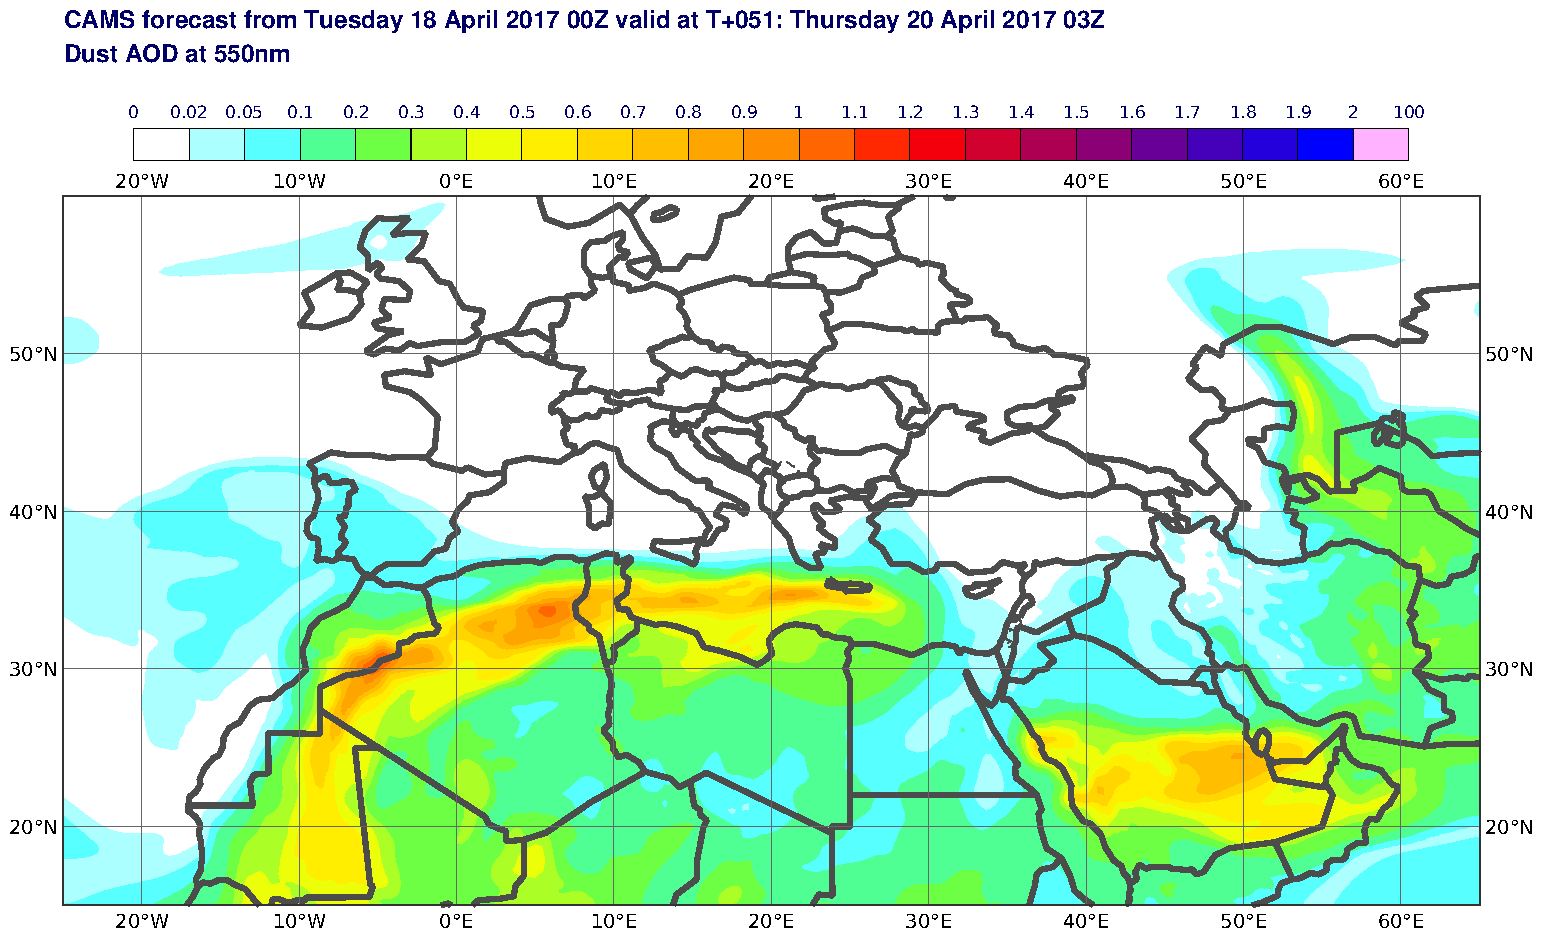 Dust AOD at 550nm valid at T51 - 2017-04-20 03:00